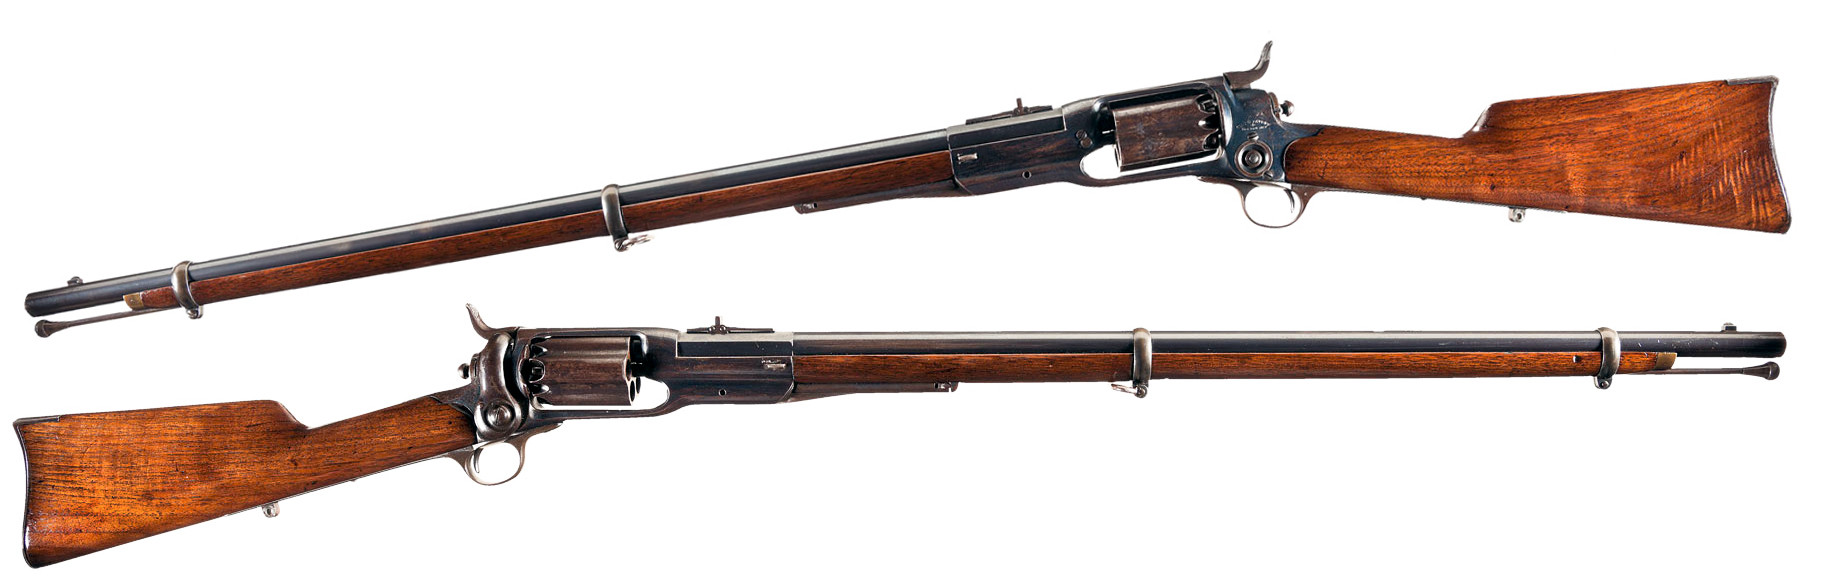 modern revolver rifle